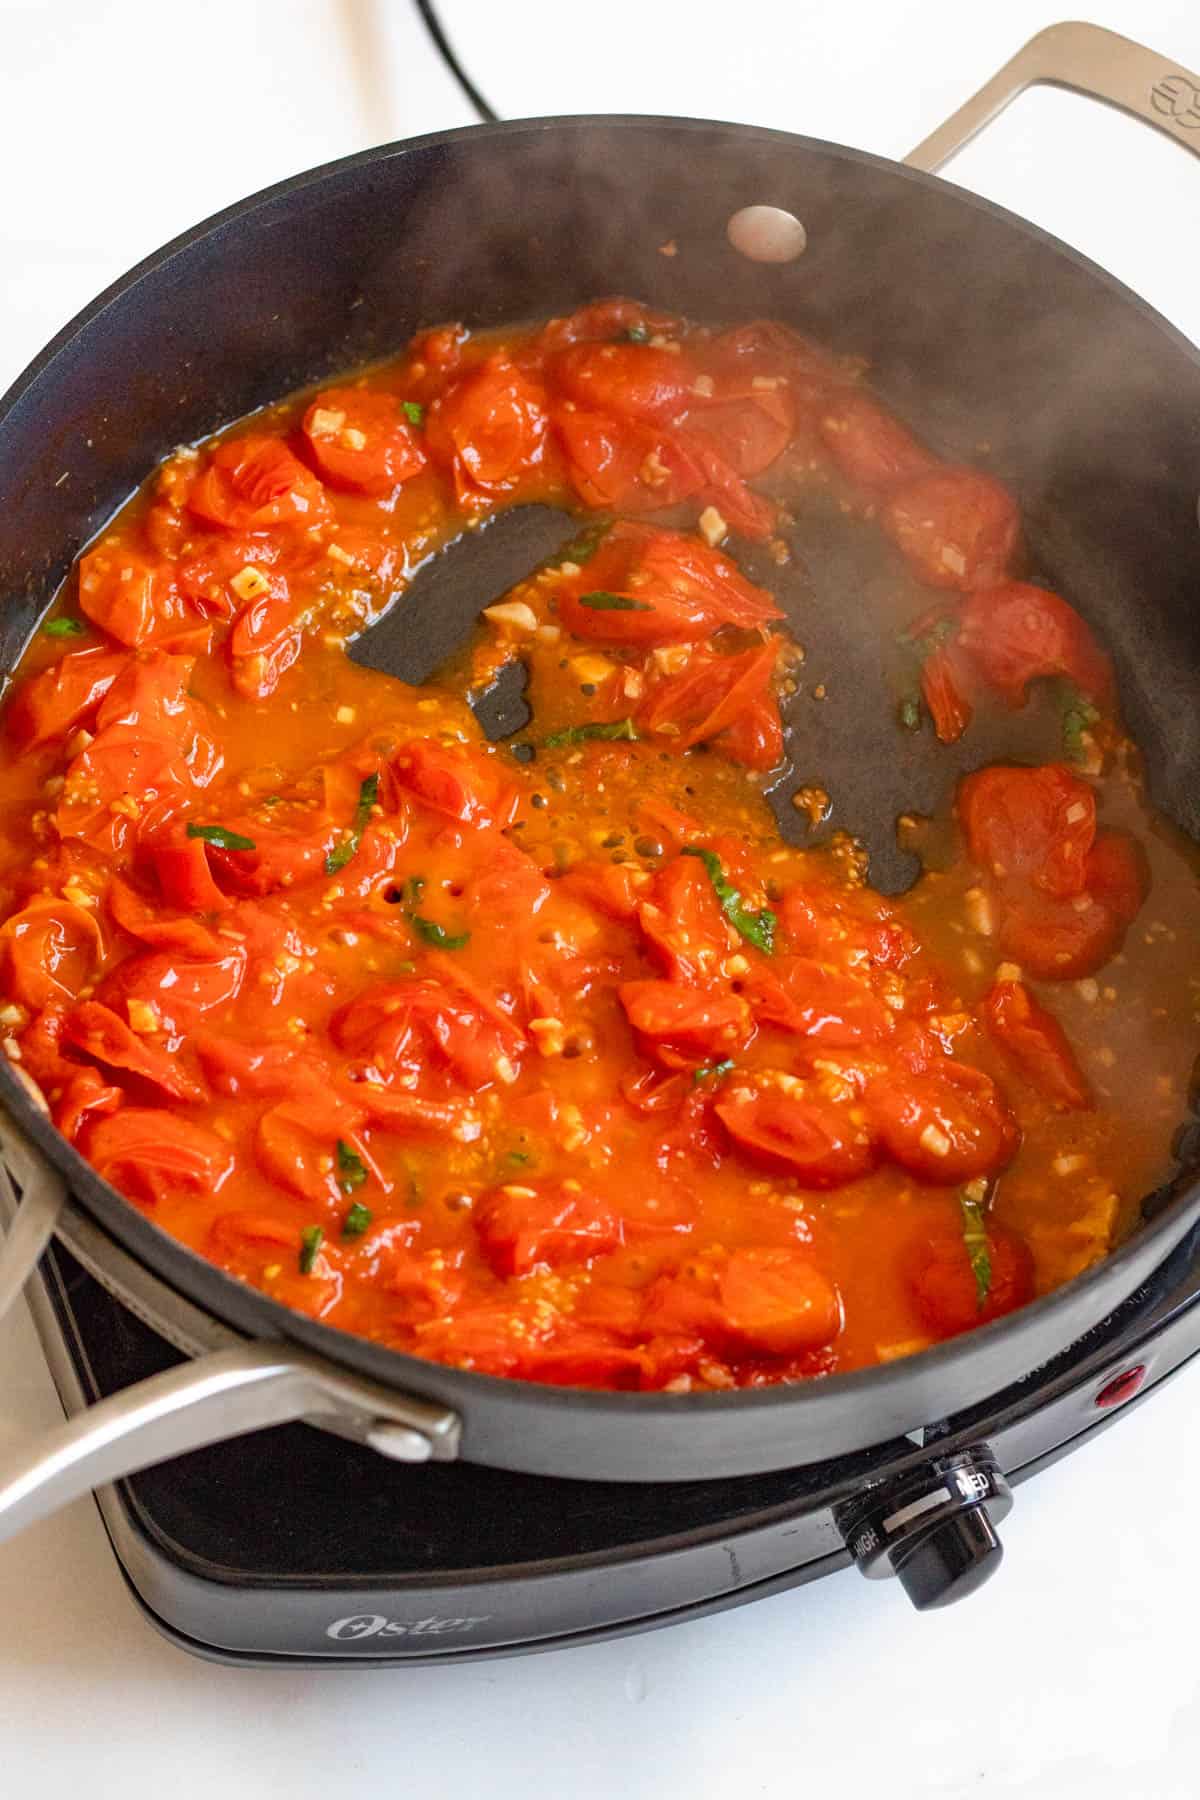 Garlic tomato sauce boiling in skillet. 